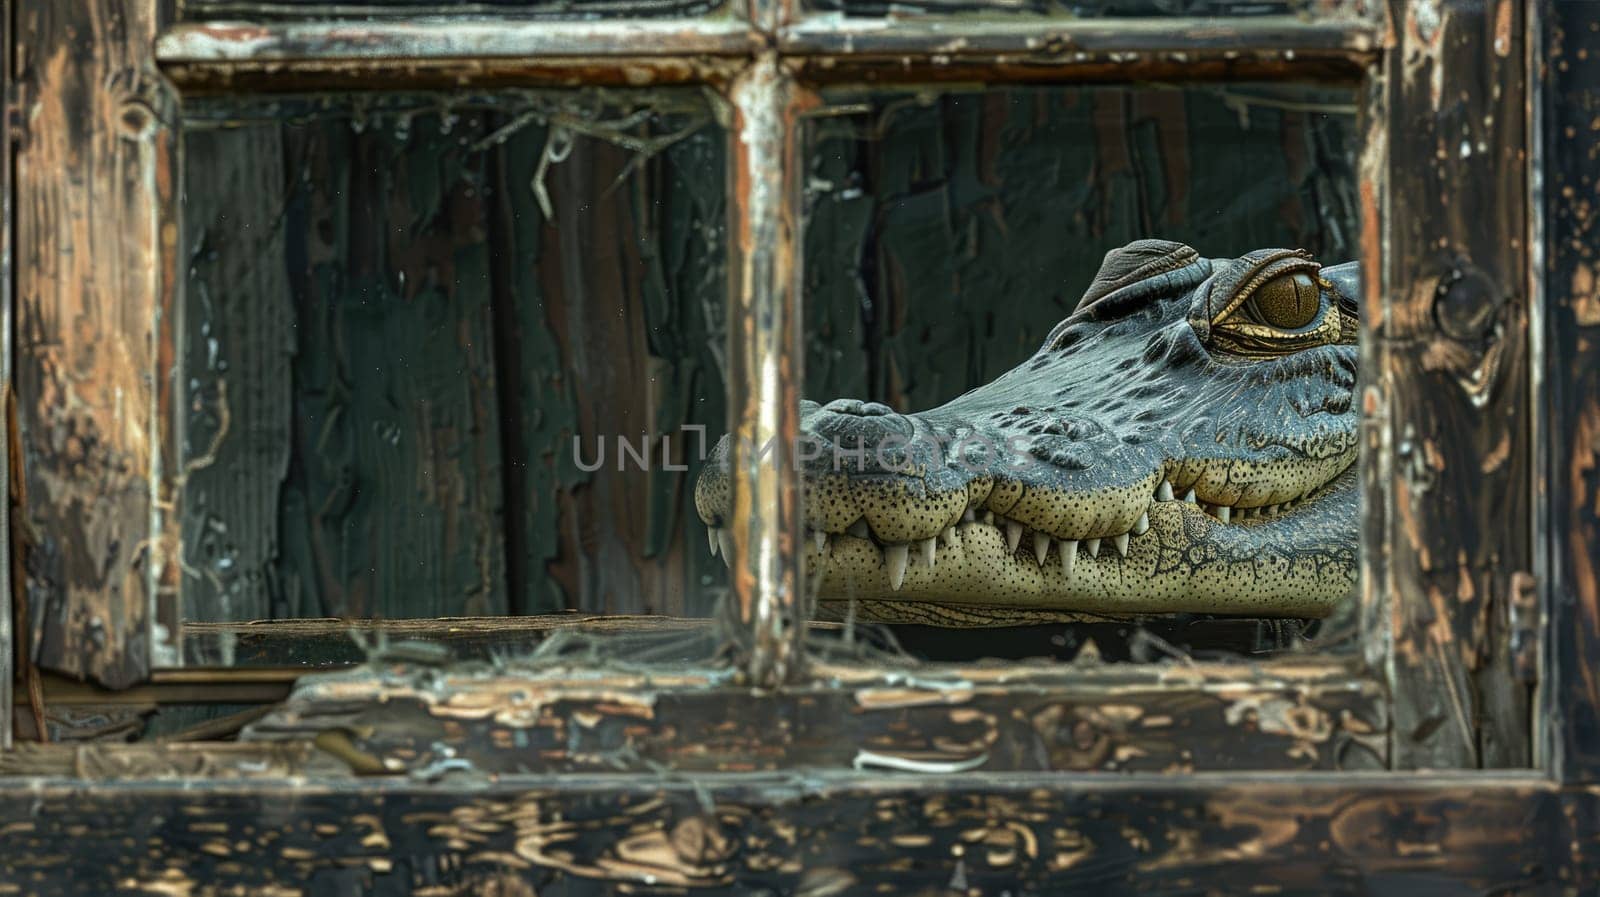 A crocodile climbed into an old abandoned house AI